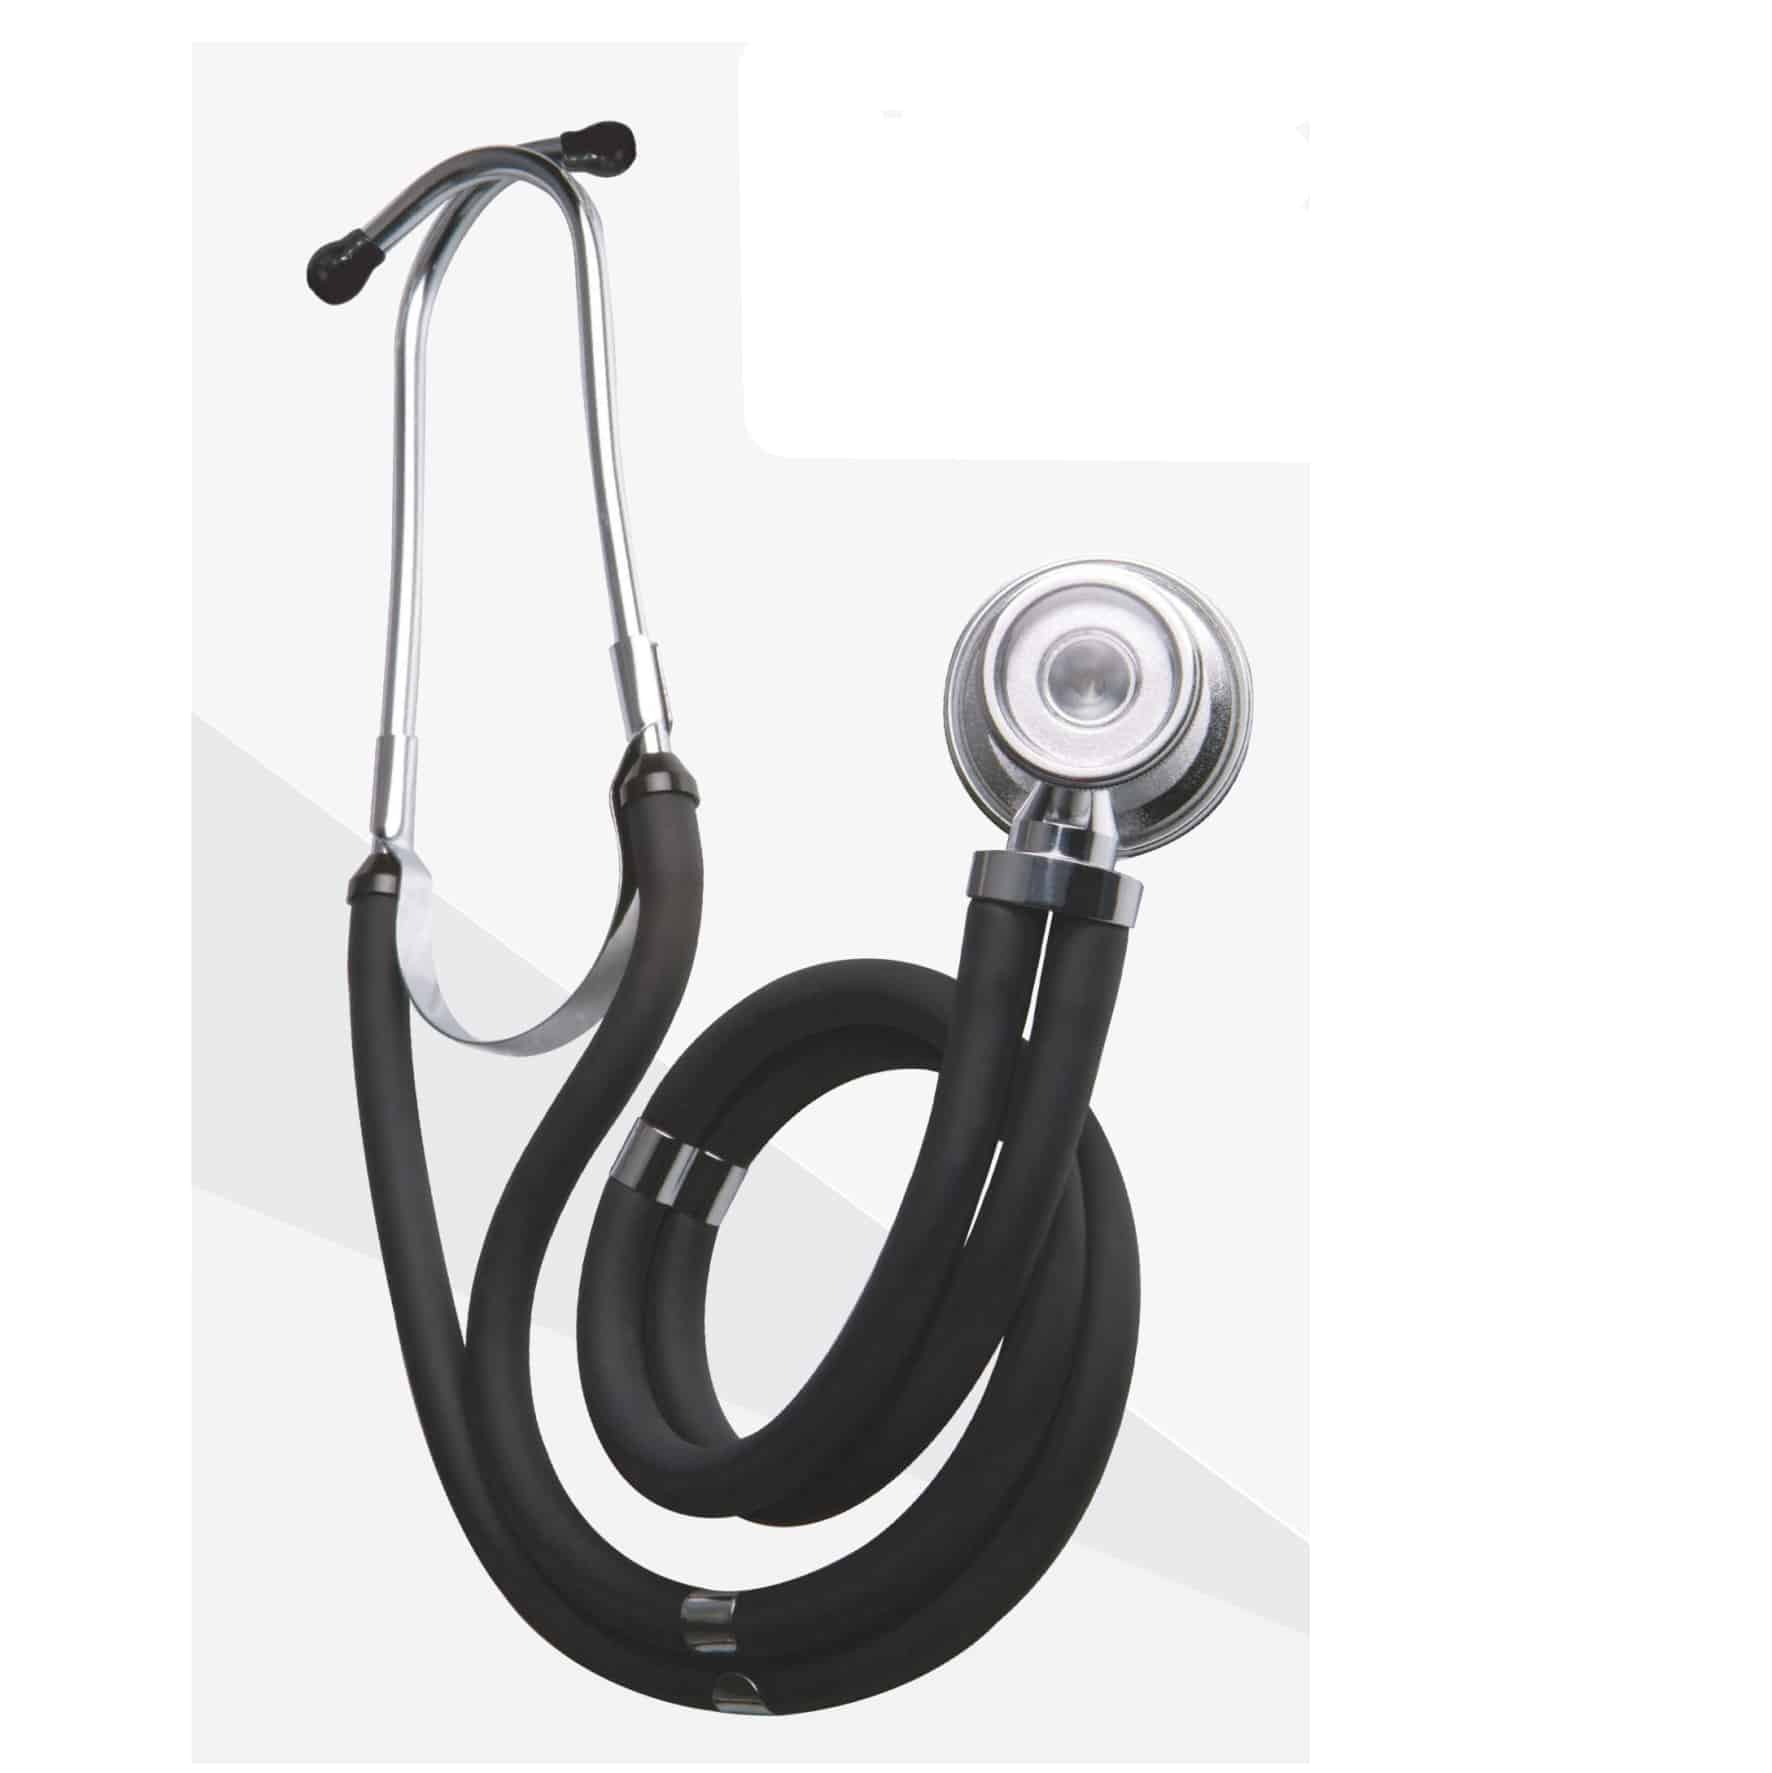 Stethoscope Rossmax Rappaport Cardio Stethoscope Interchangeable Head / Chestpiece